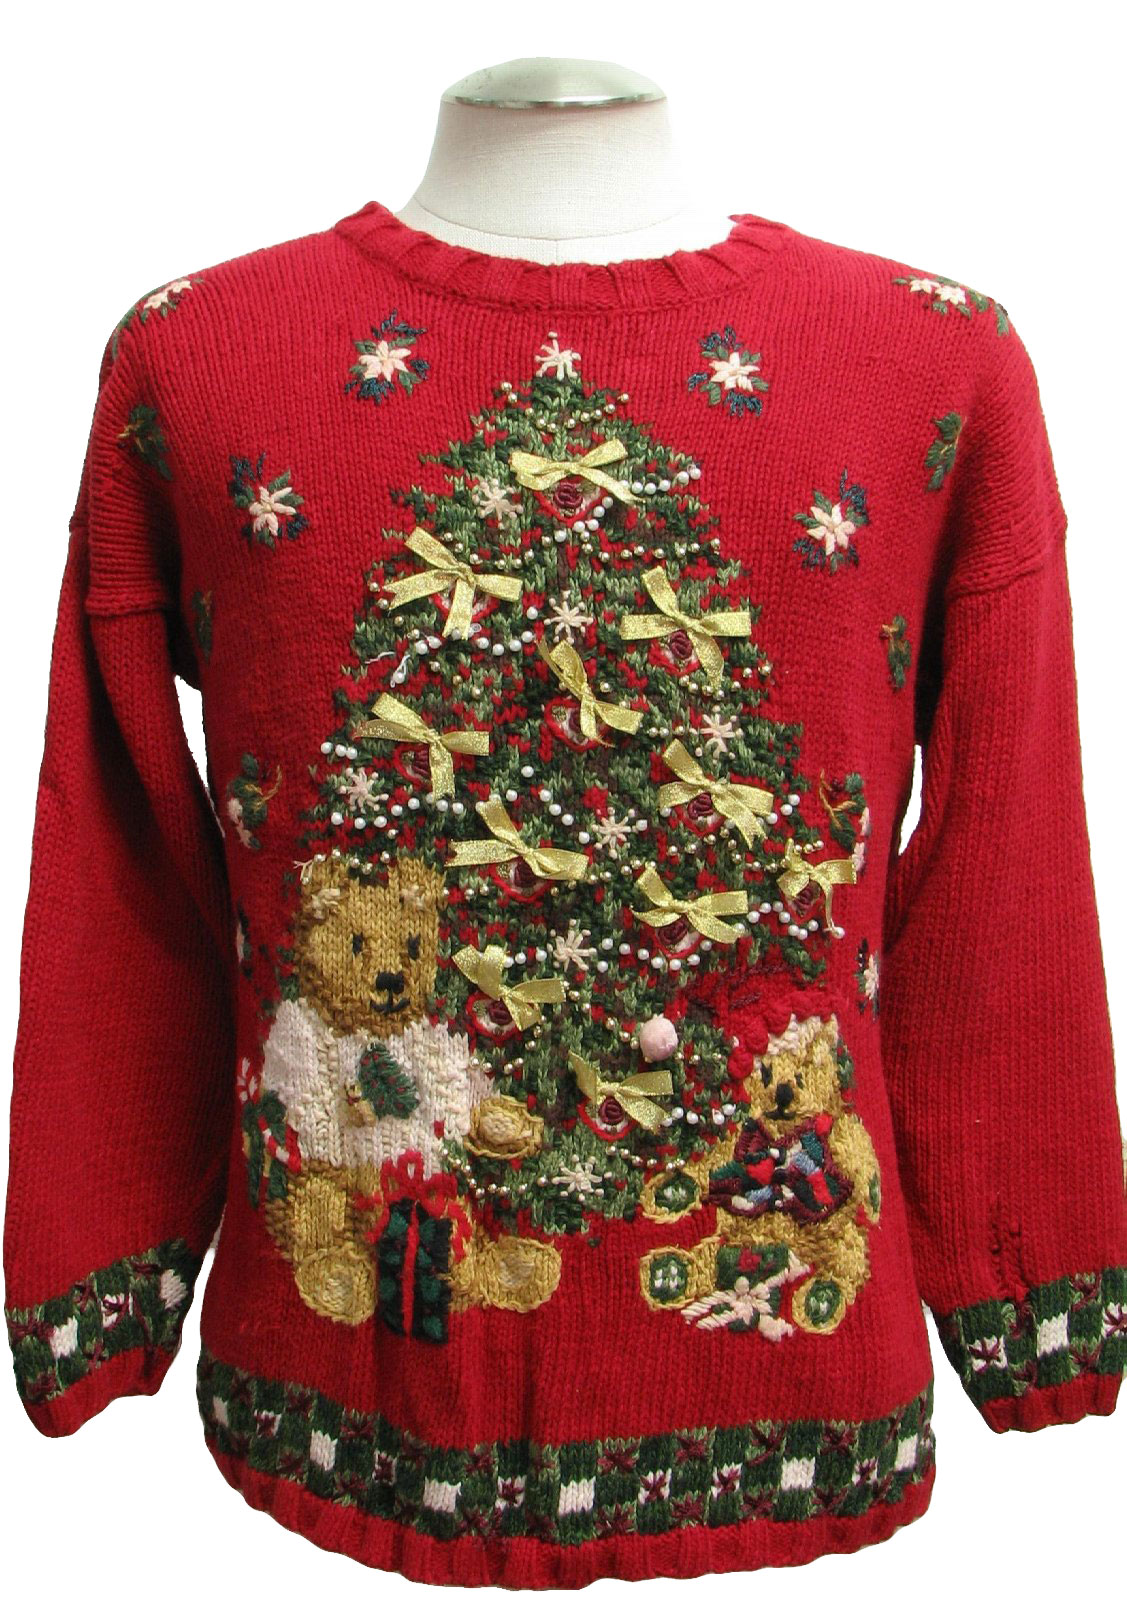 Bear-Tastic Ugly Christmas Sweater: -Fashion Bug- Unisex red background ...